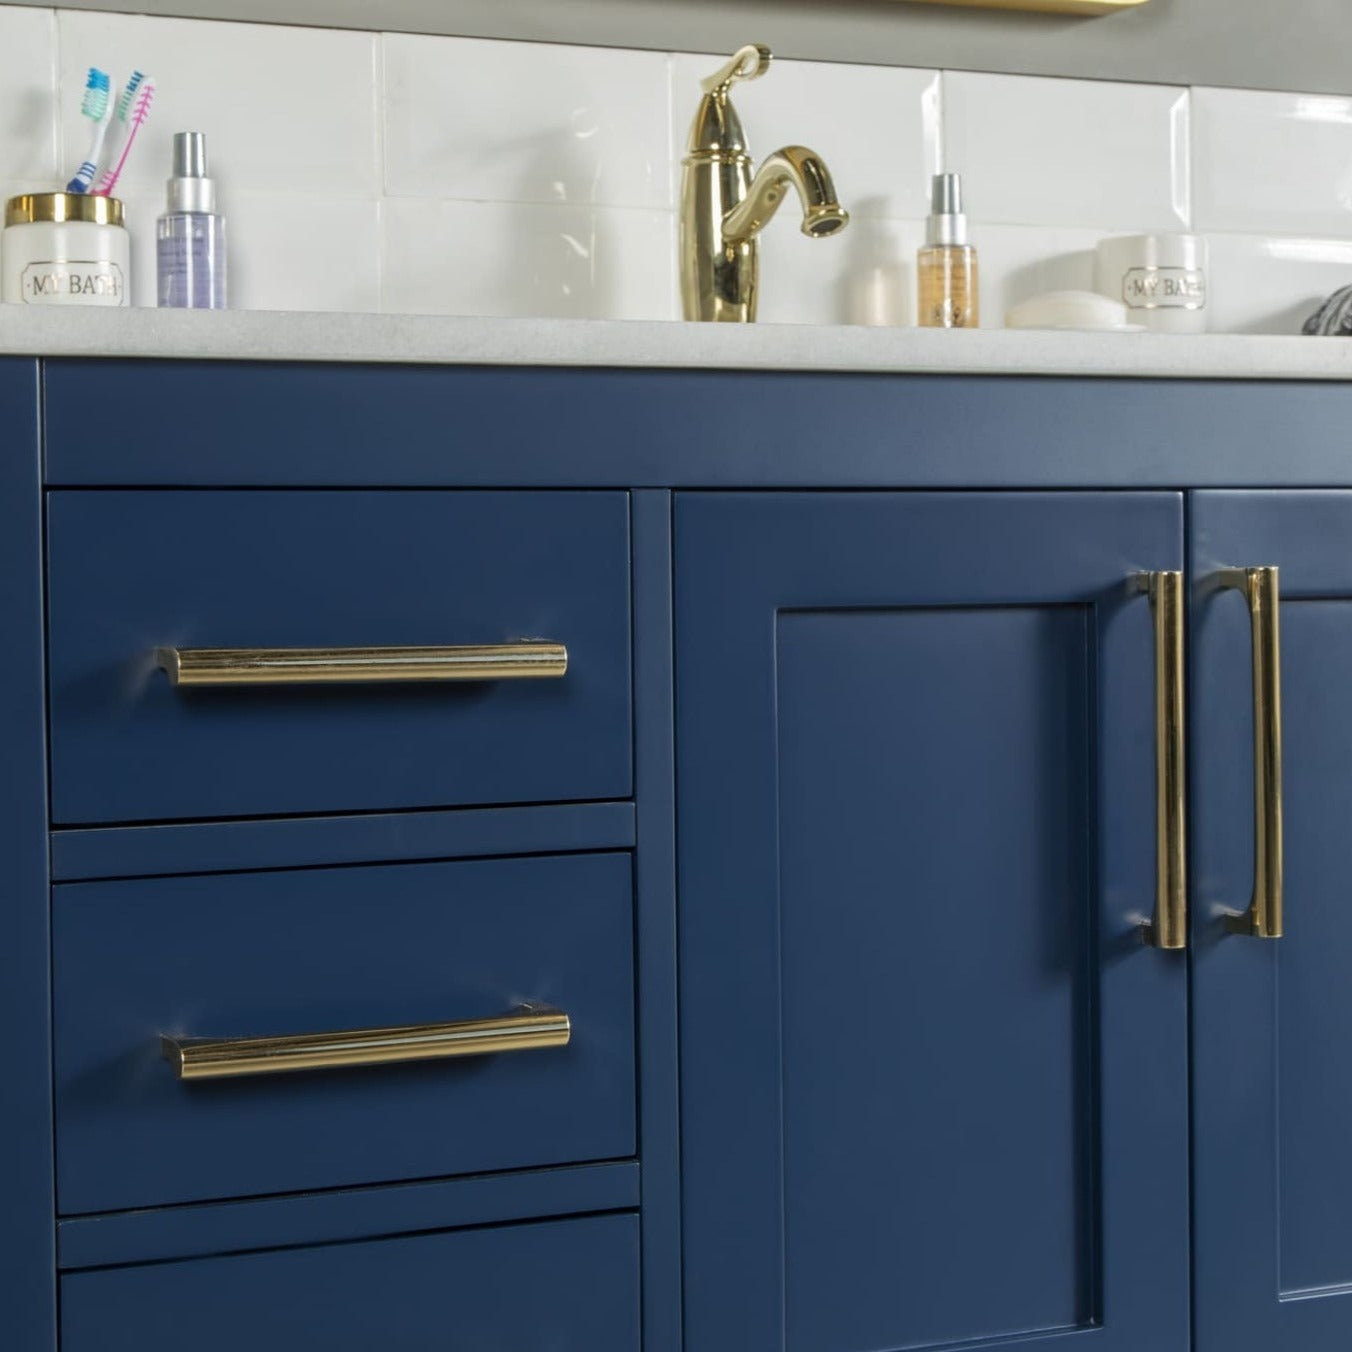 Ahley Bathroom Vanity Homelero 48"  #size_48"  #color_blue  #hardware_brass